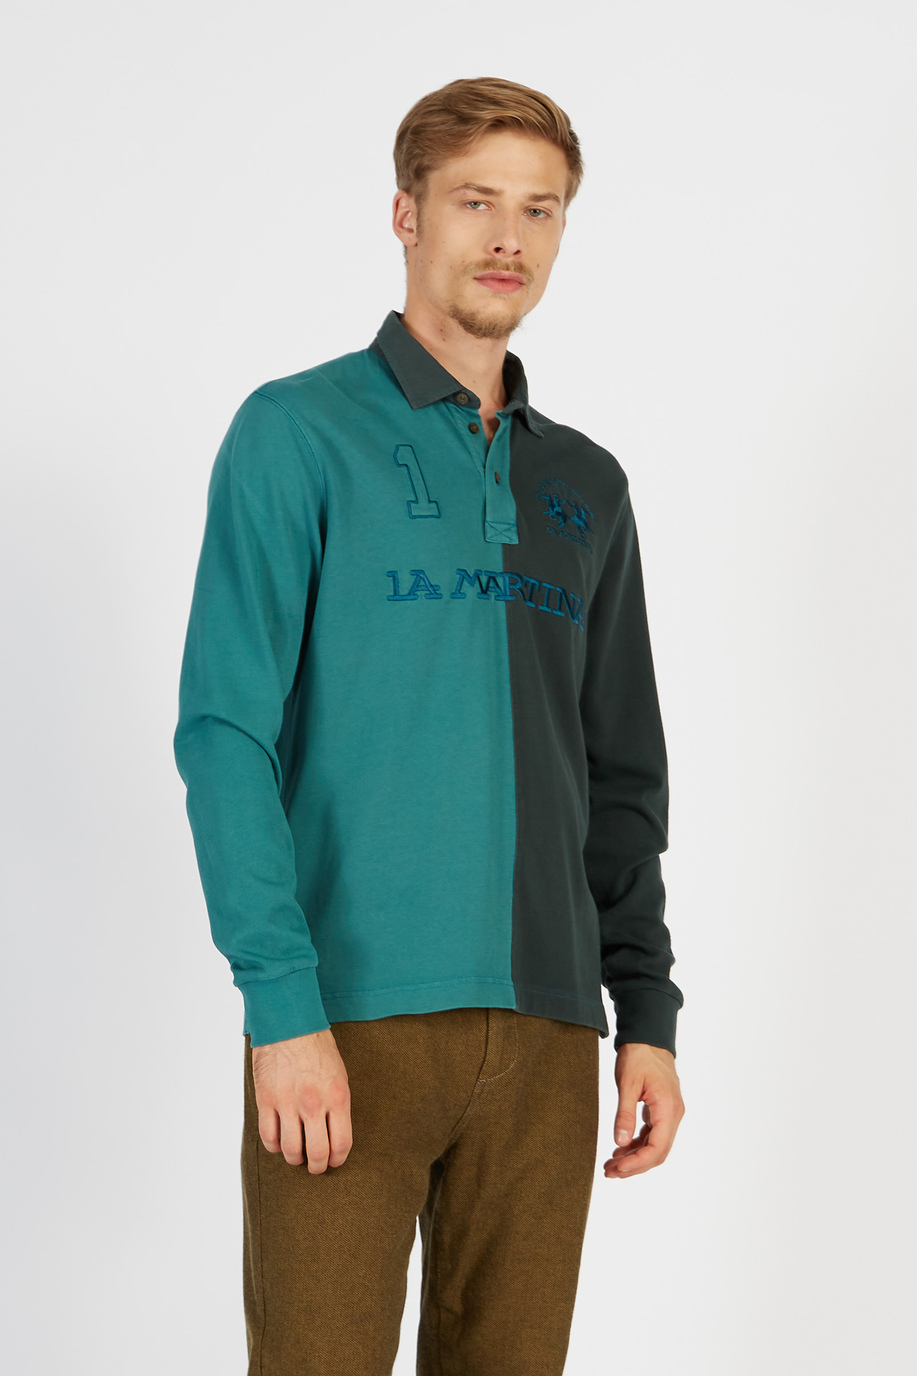 Herren-Poloshirt aus Baumwolle mit langen Ärmeln - Regular fit | La Martina - Official Online Shop